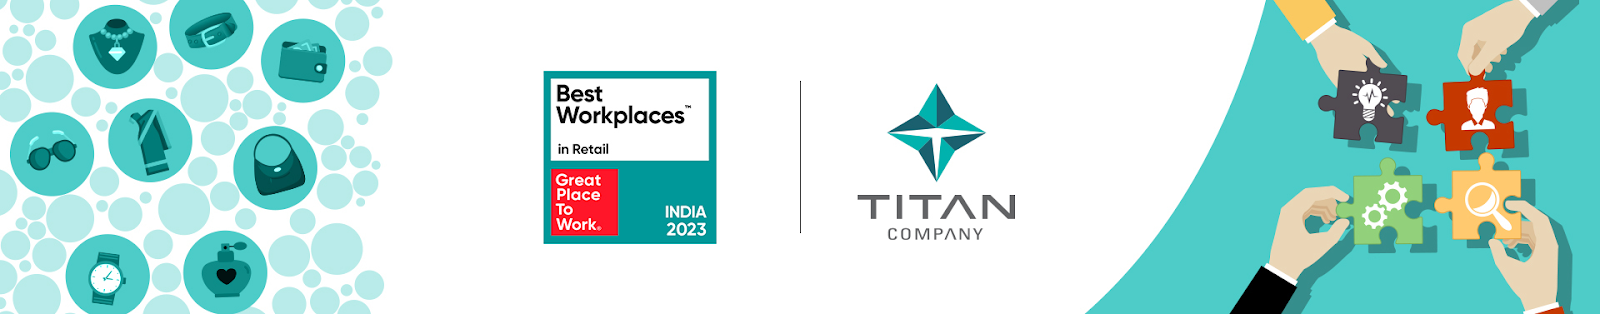 Titan Company's Share Price Reaches Record High - Asiana Times